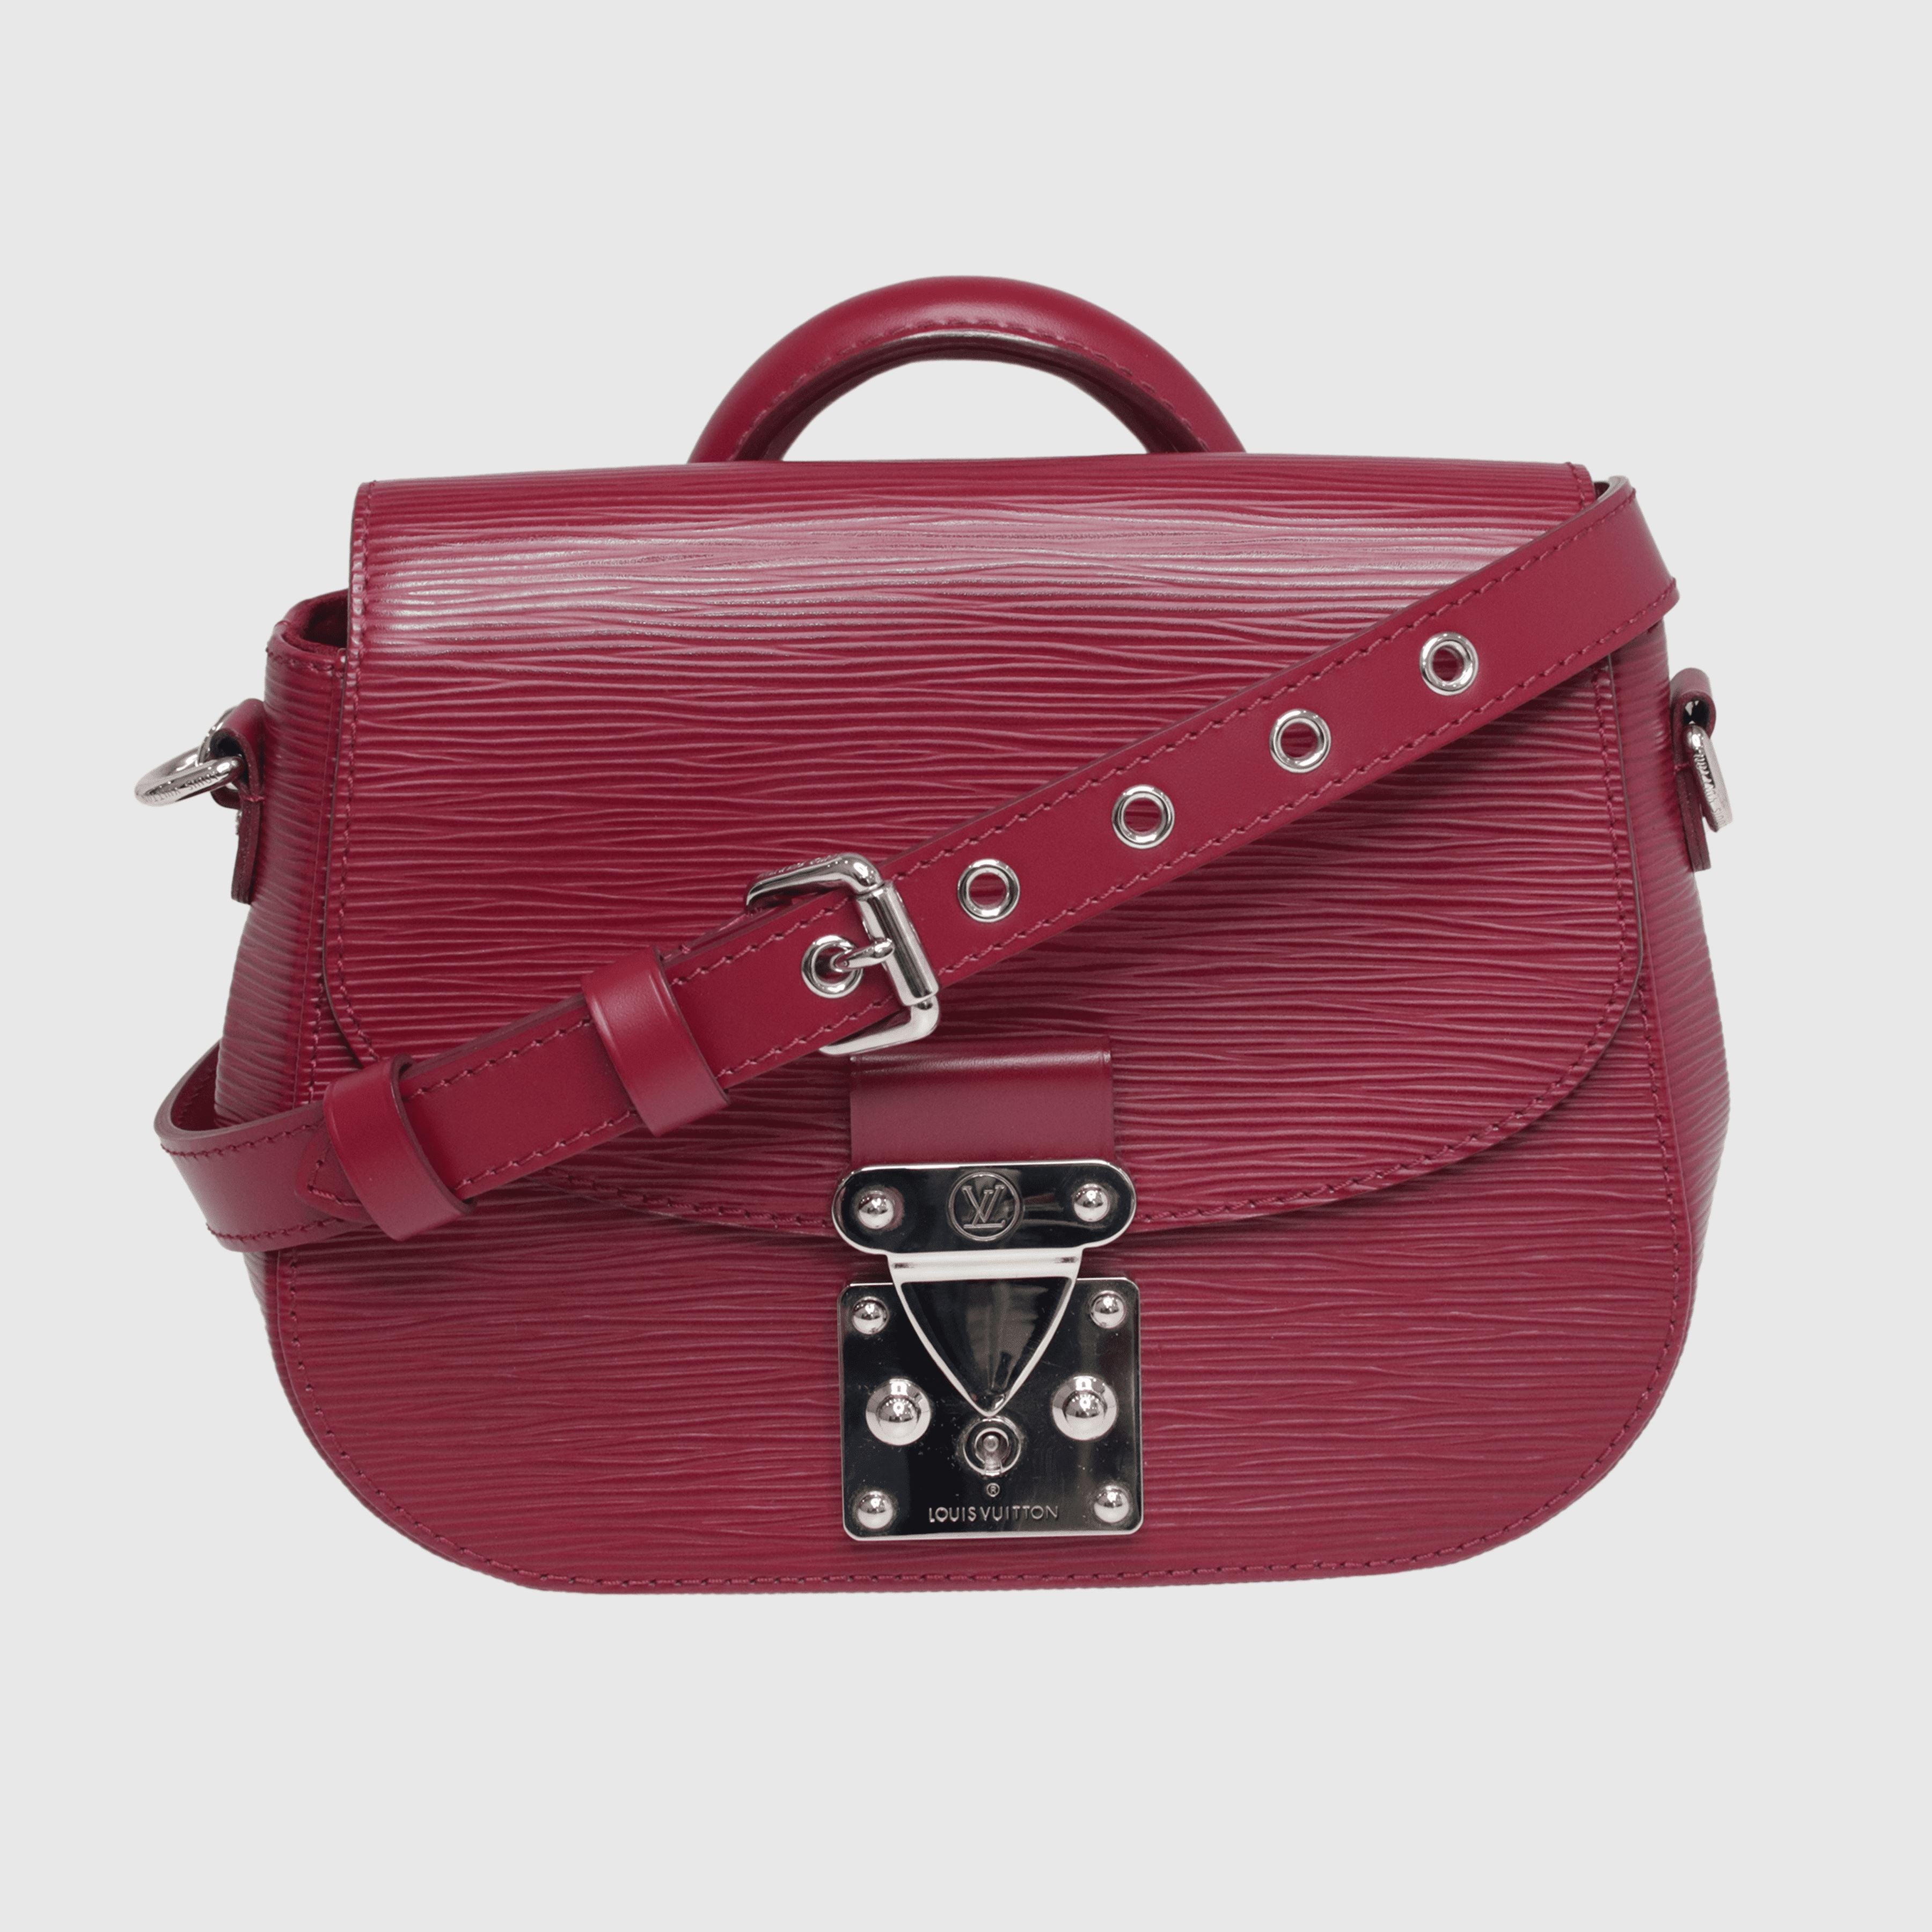 Fuchsia Epi Eden PM Bag Bag Louis Vuitton 